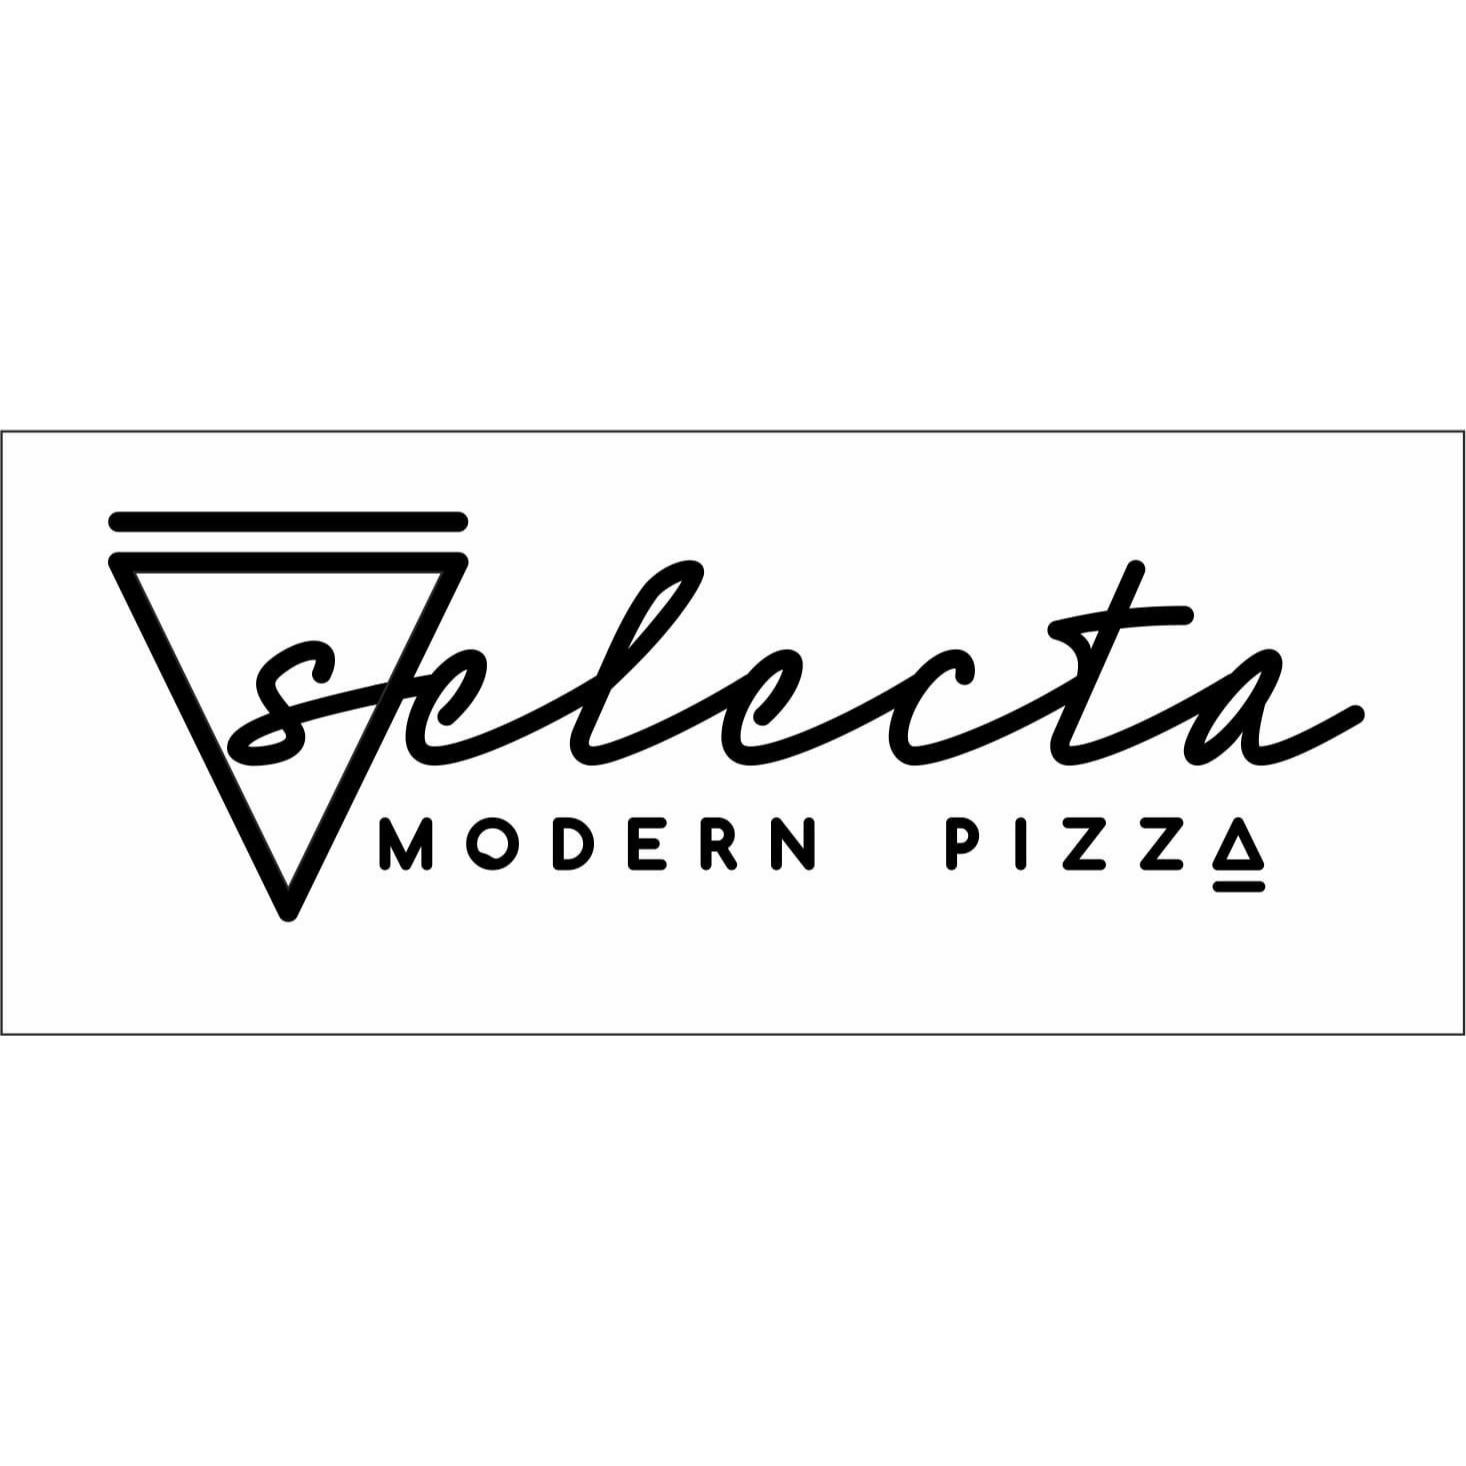 Selecta Modern Pizza in Berlin - Logo